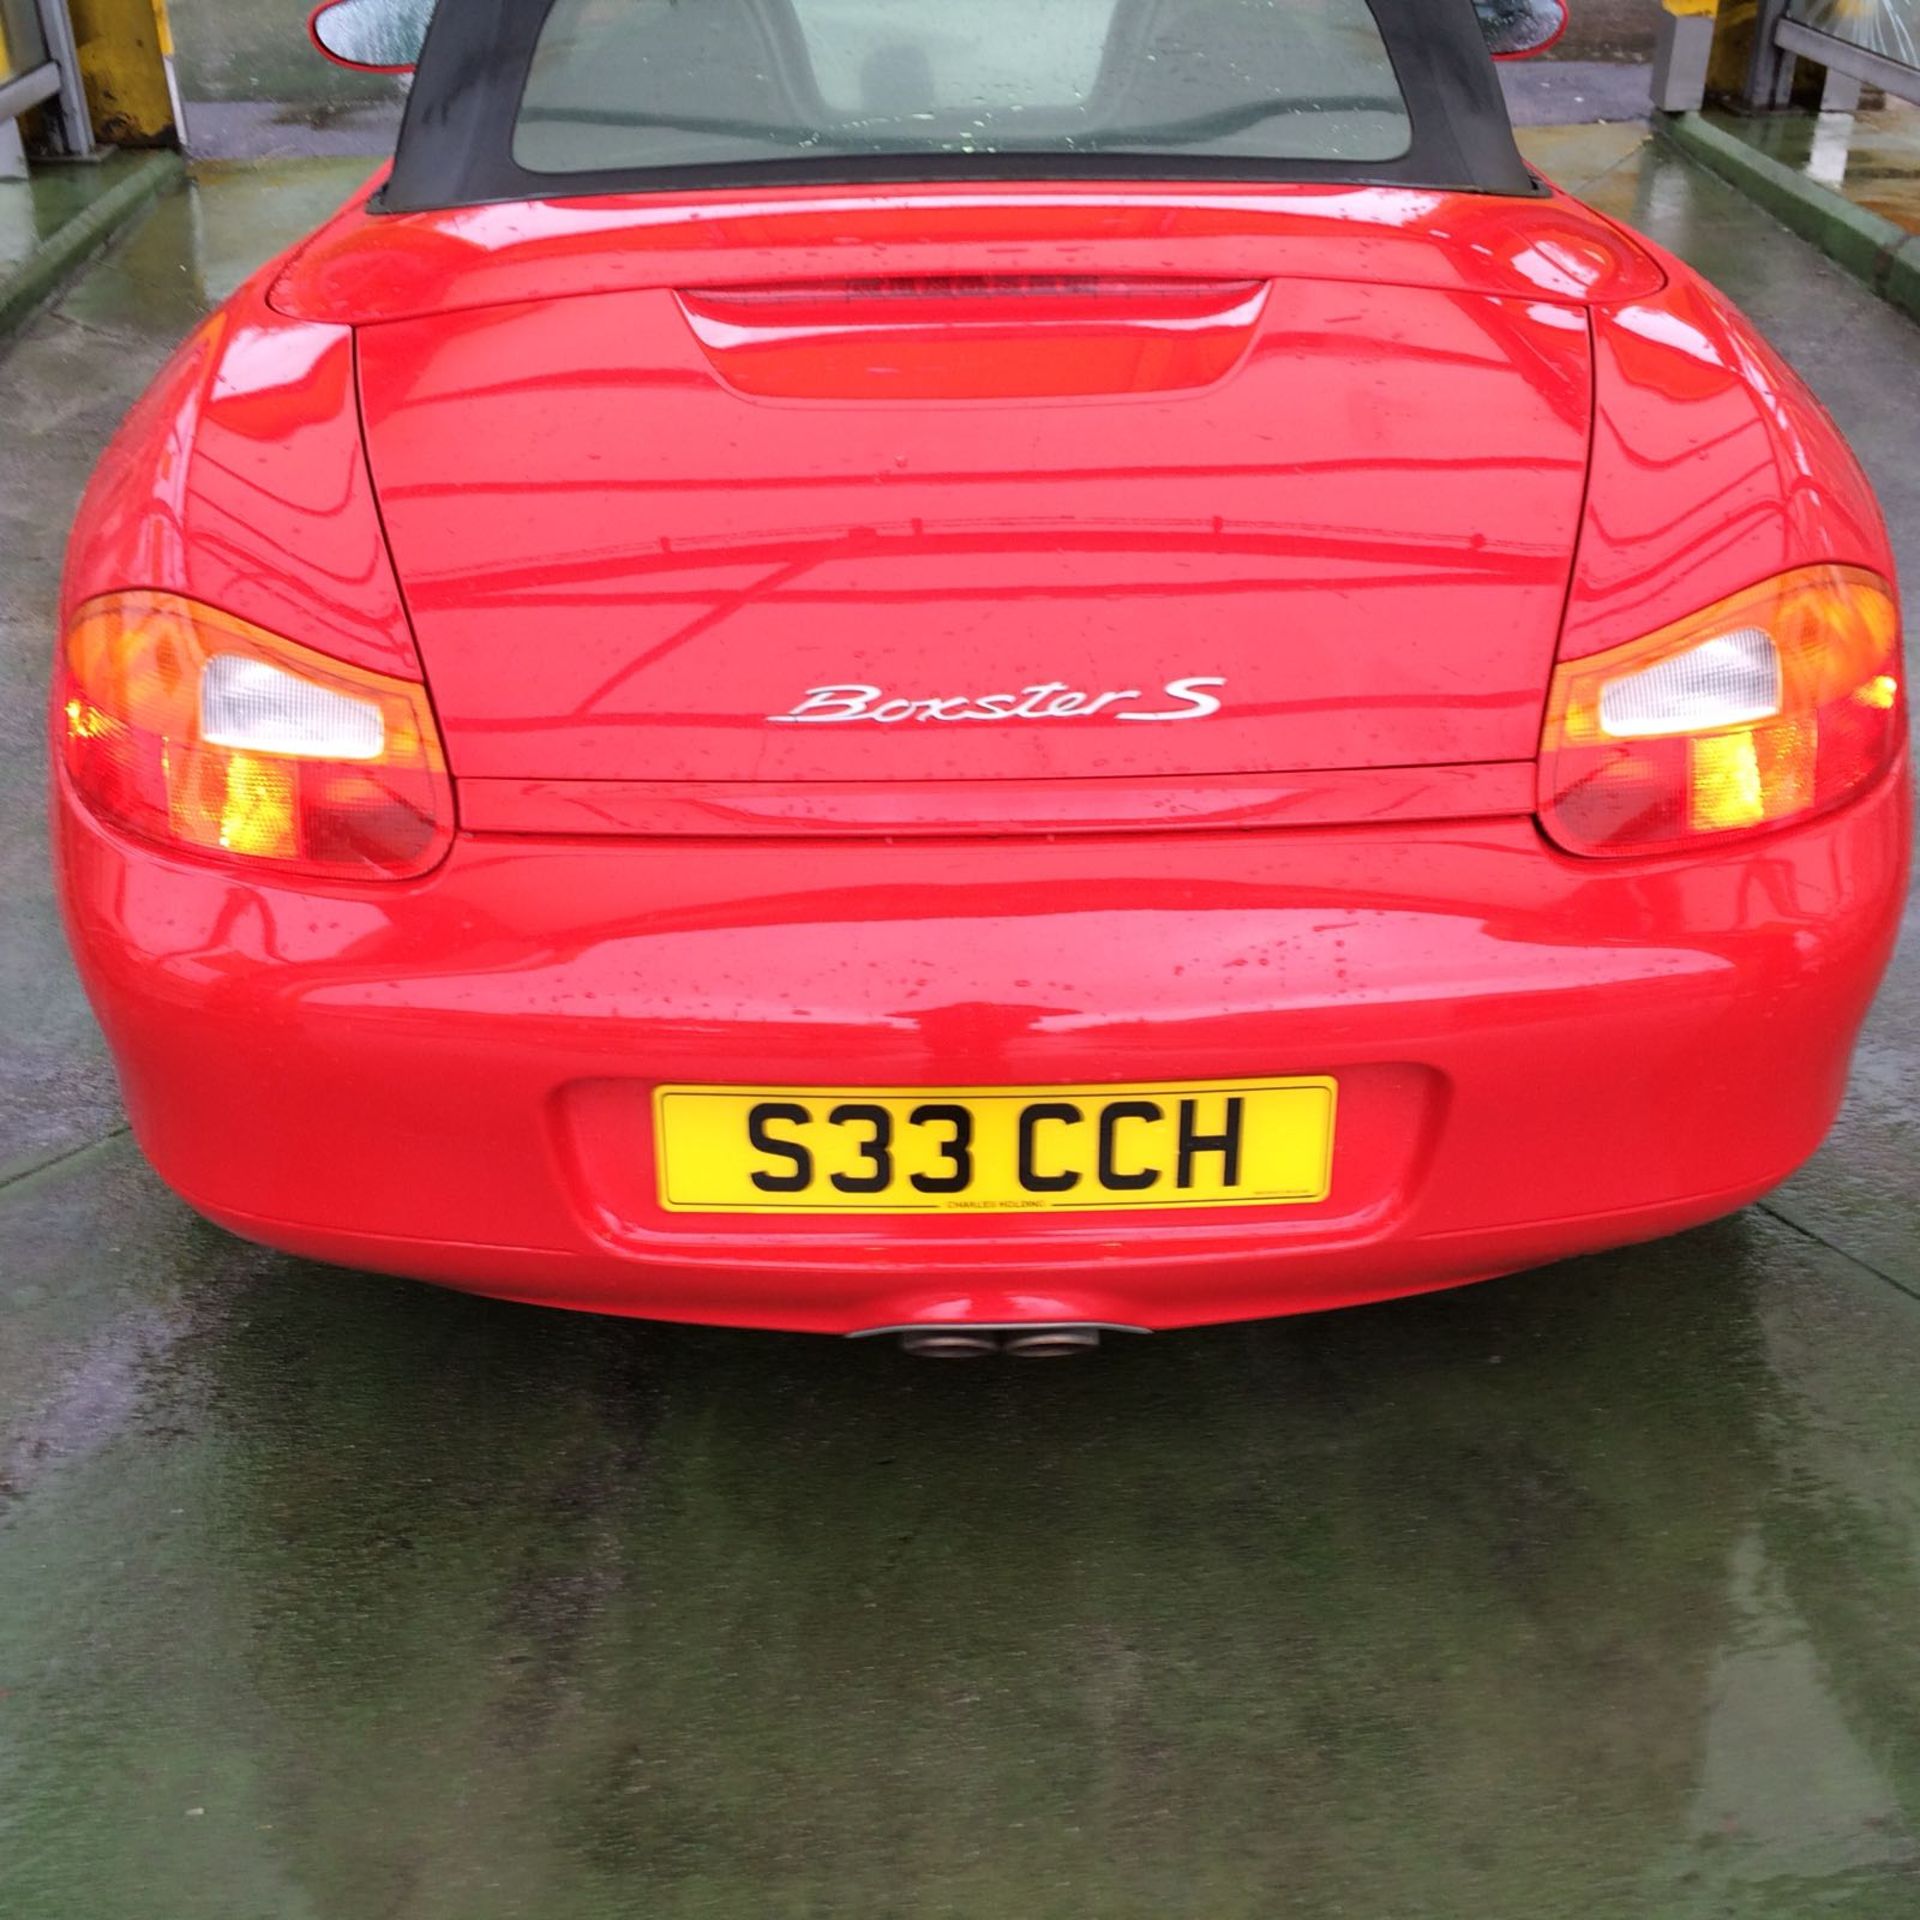 1999 Porsche Boxter (LHD) on UK Plates - Image 3 of 12